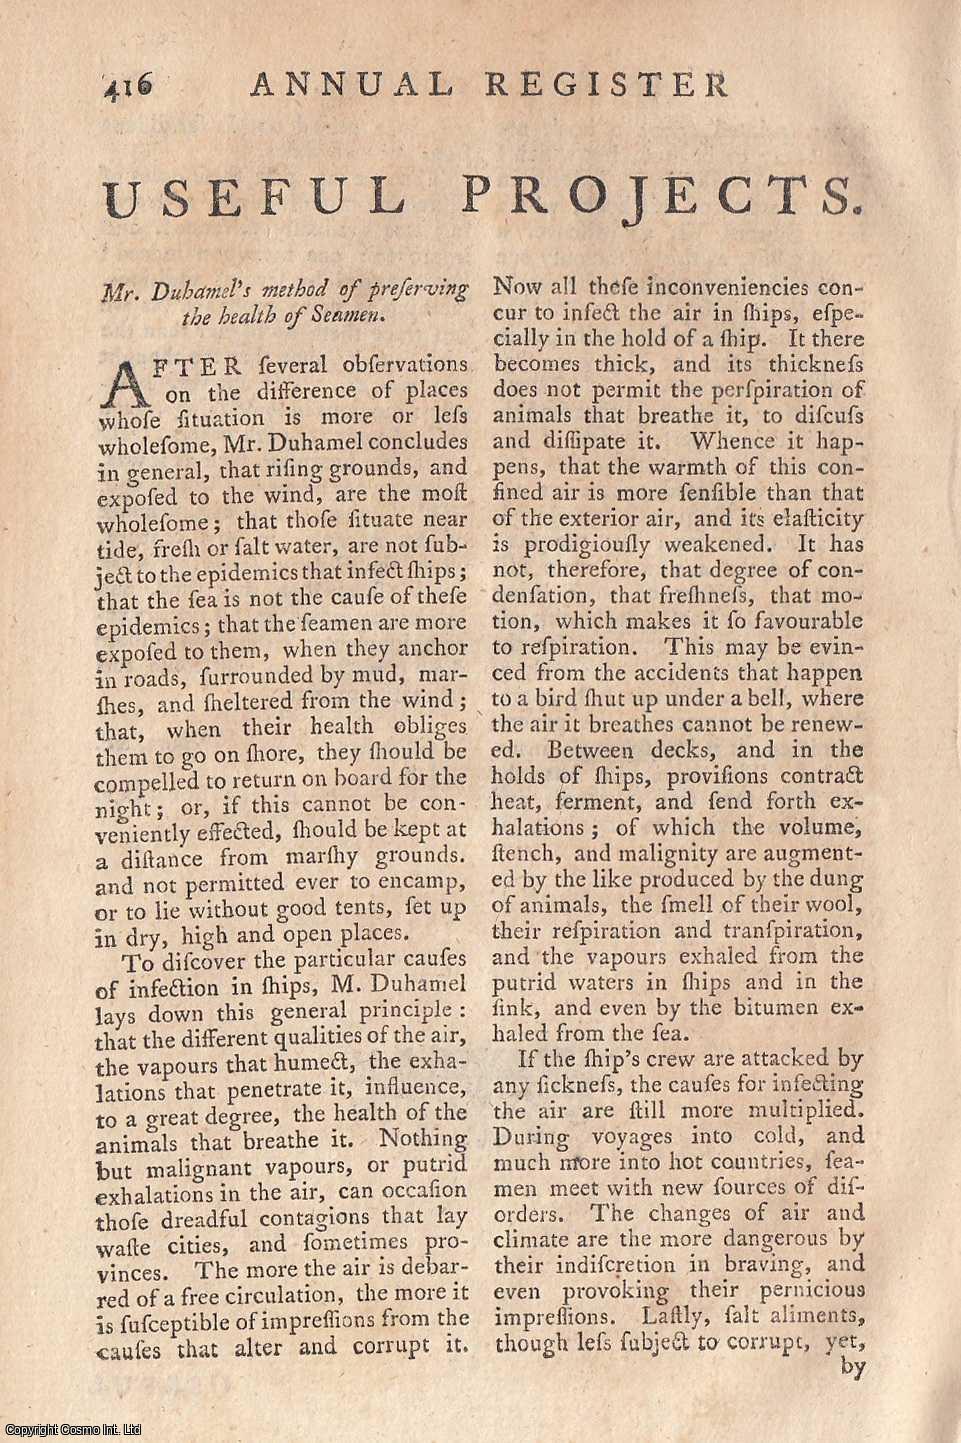 Edmund Burke - Mr. Duhamel's method of preserving the health of Seamen. An original article from the Annual Register for 1759.